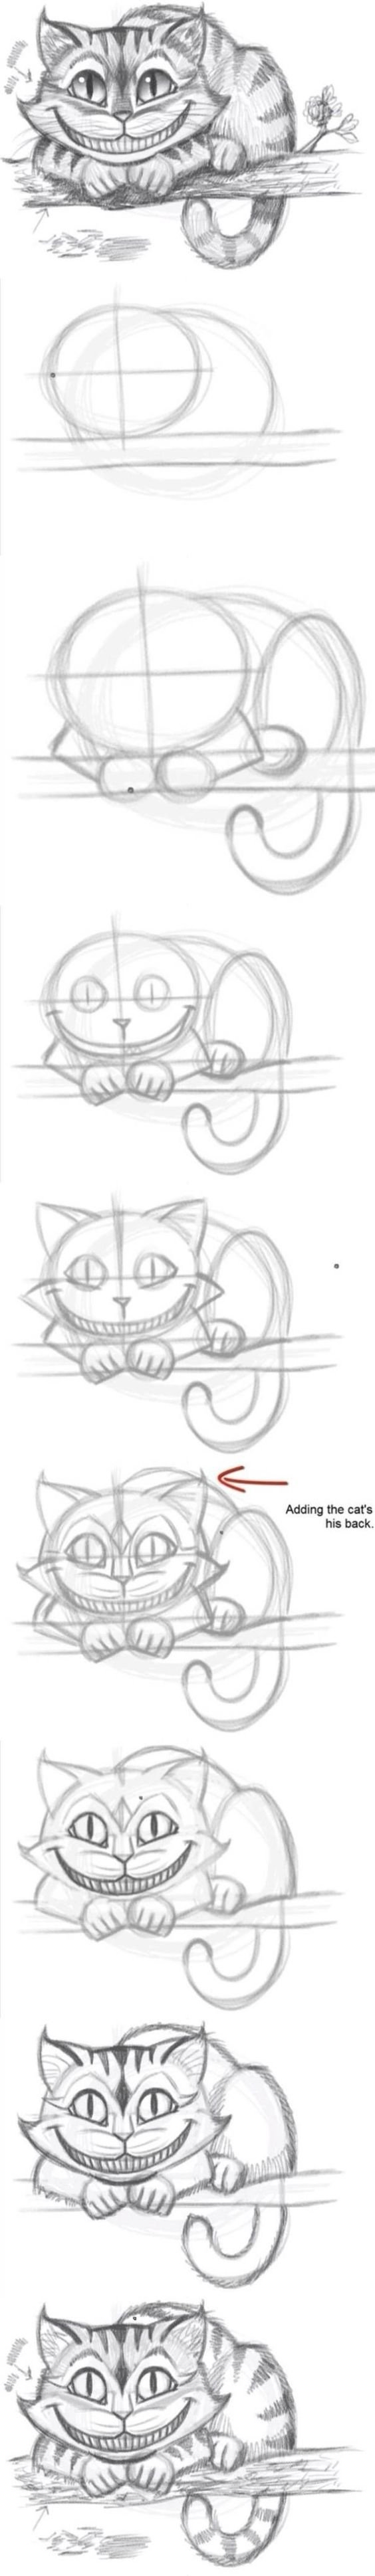 Уроки рисования карандашом. Чеширский кот